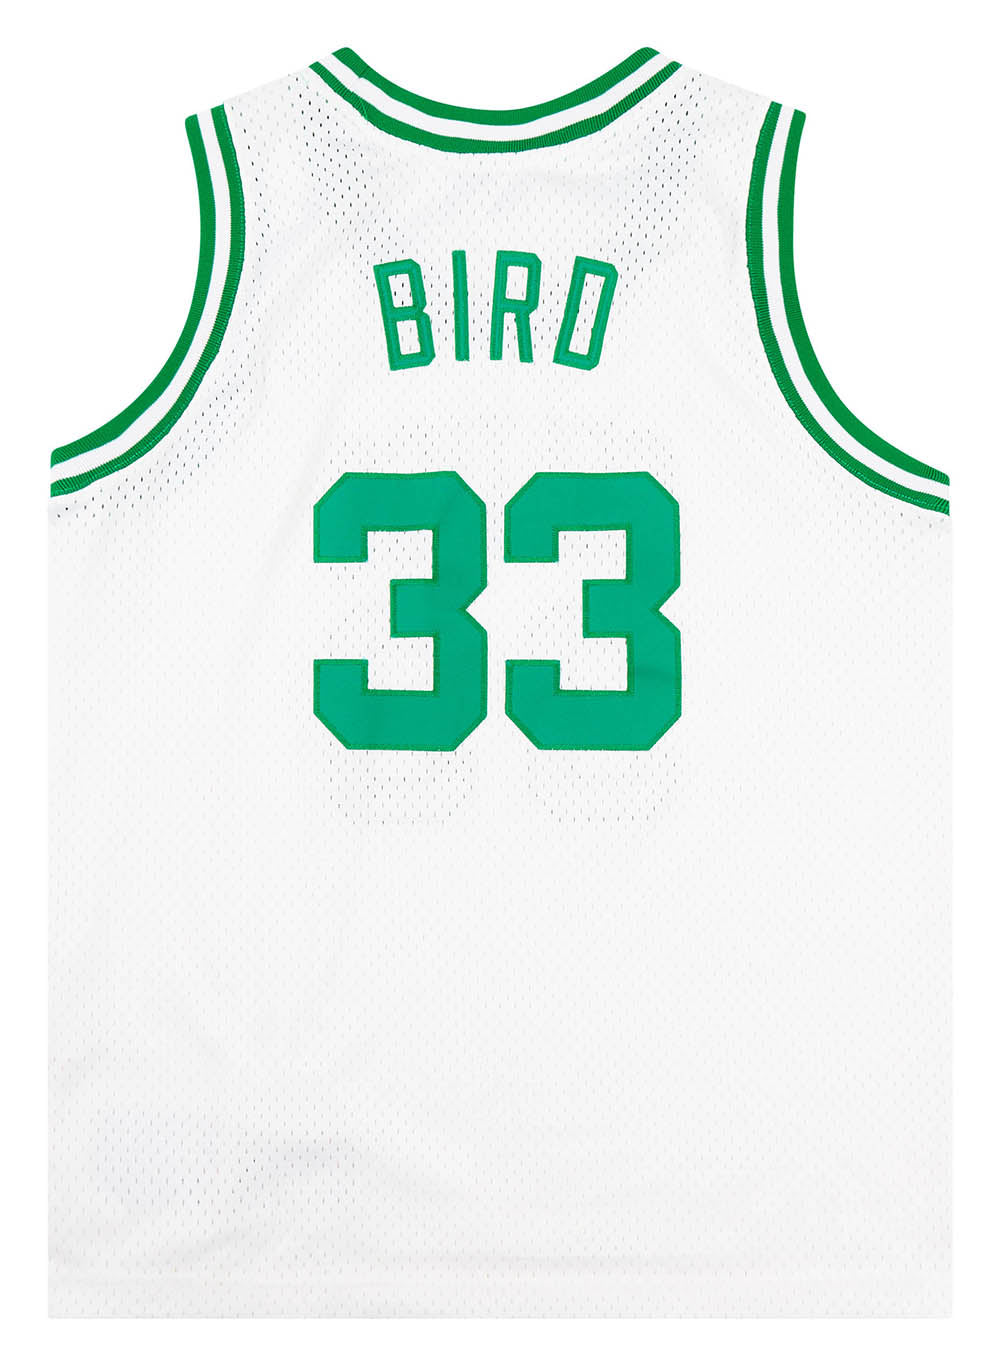 Shaquille O'Neal Boston Celtics Hardwood Classics Jerseys